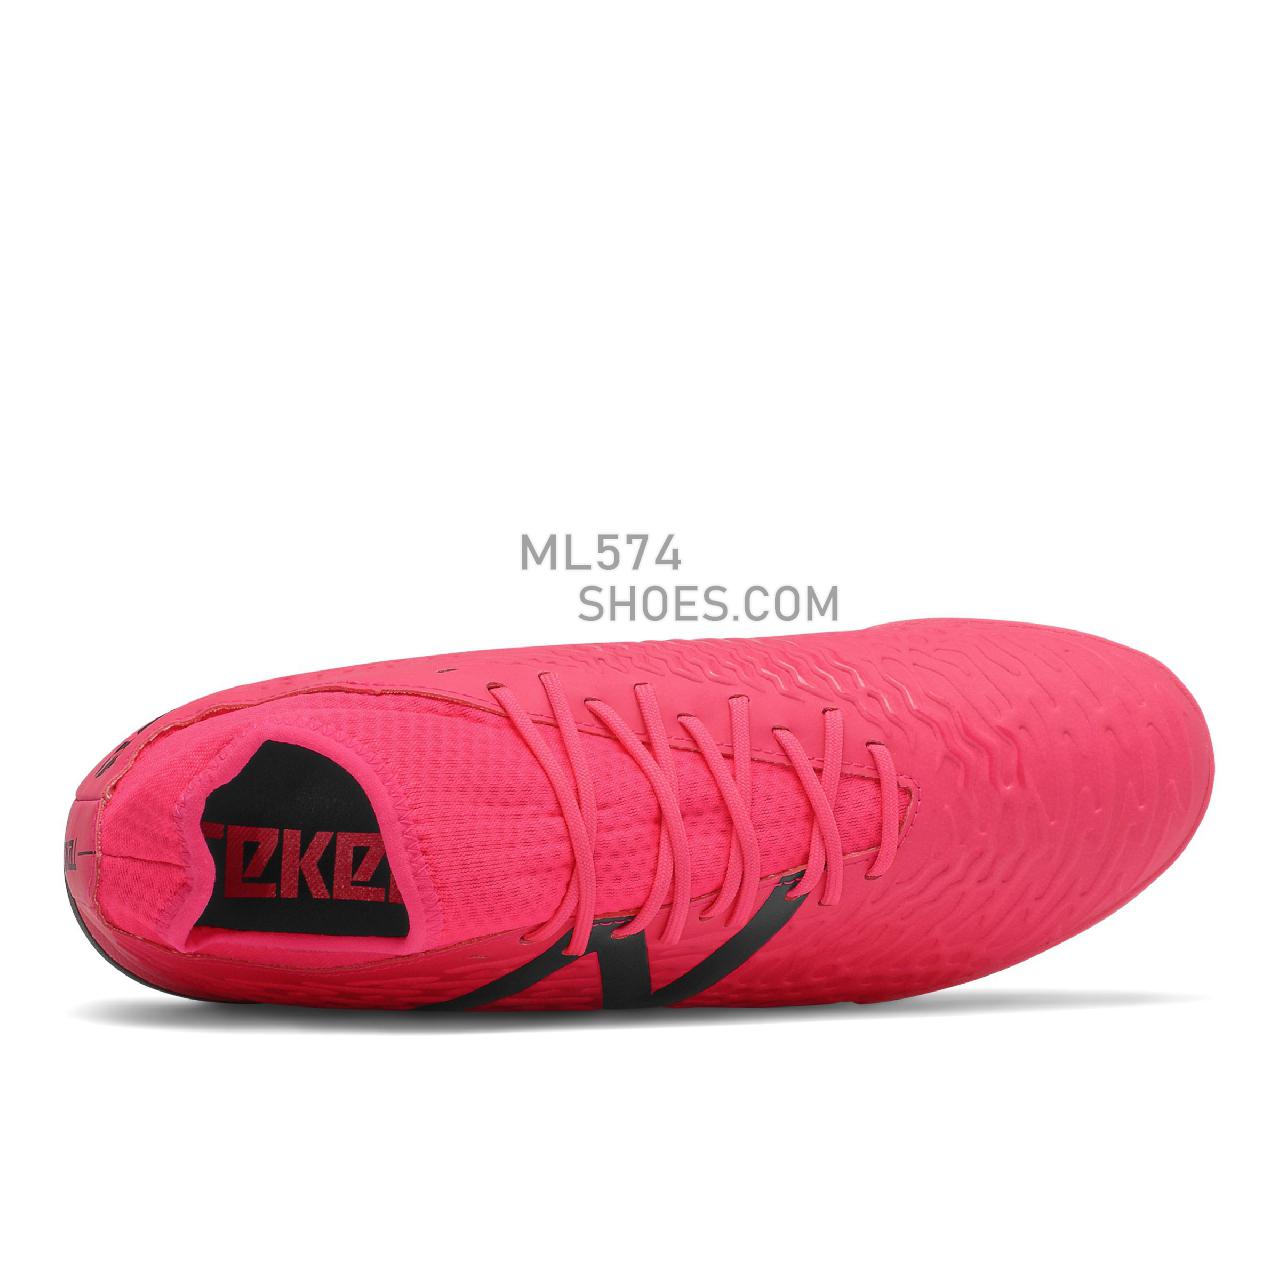 New Balance Tekela V3+ Magique TF - Men's Turf FootBall Boots - Alpha Pink with Horizon - MST3TP35